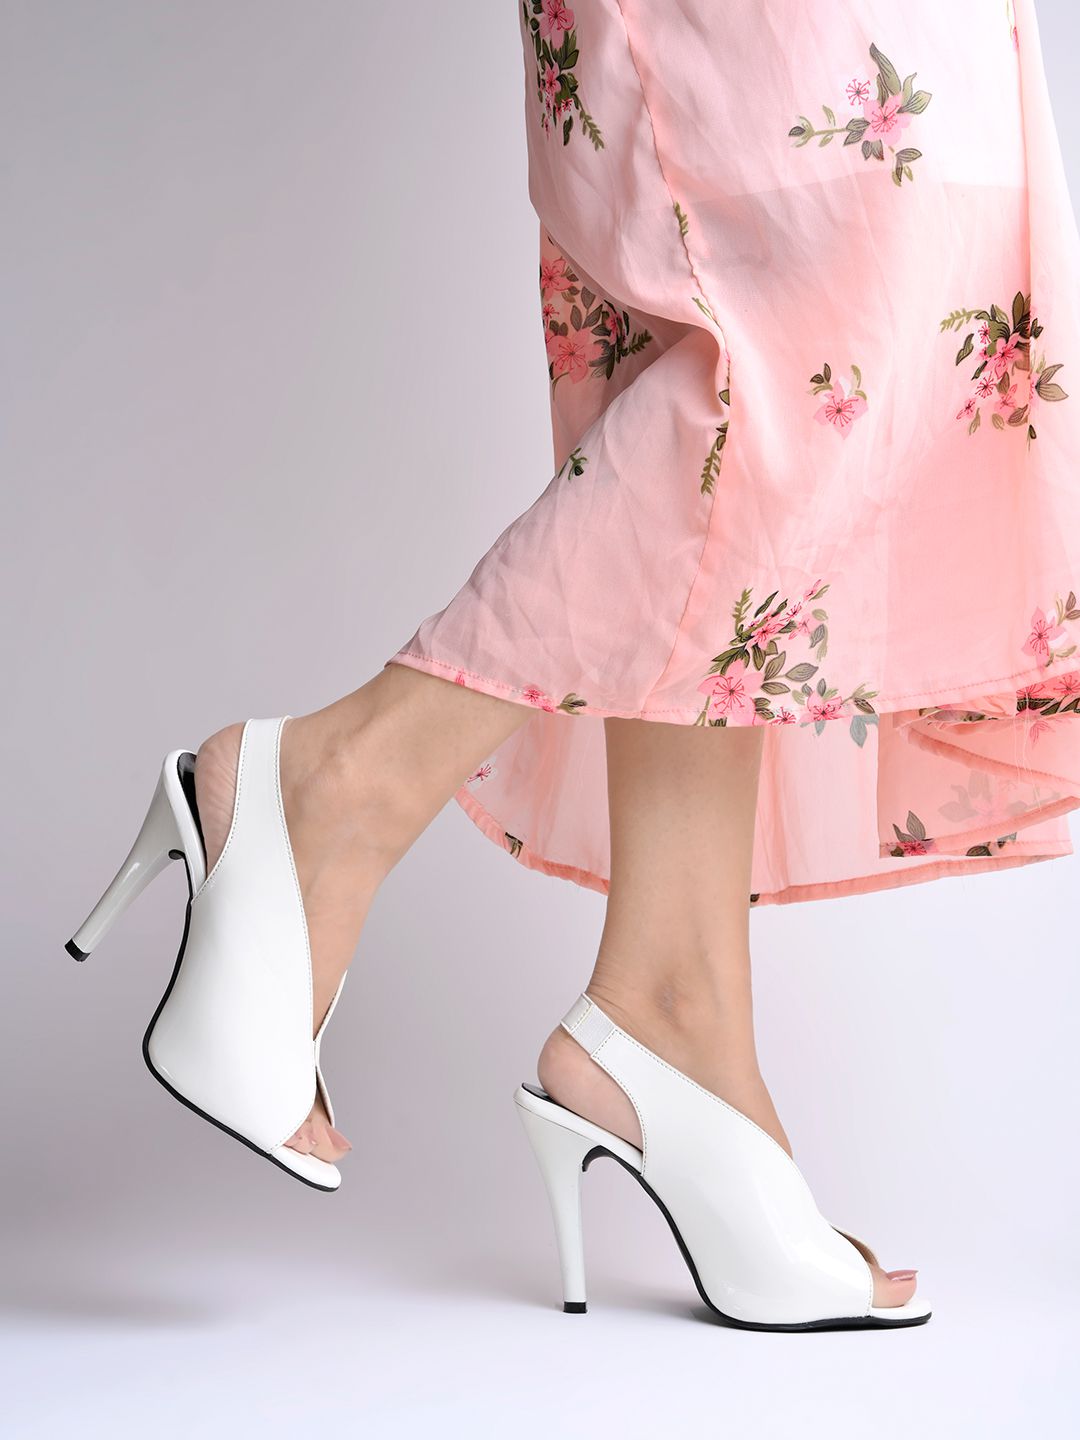     			Shoetopia - White Women's Sandal Heels